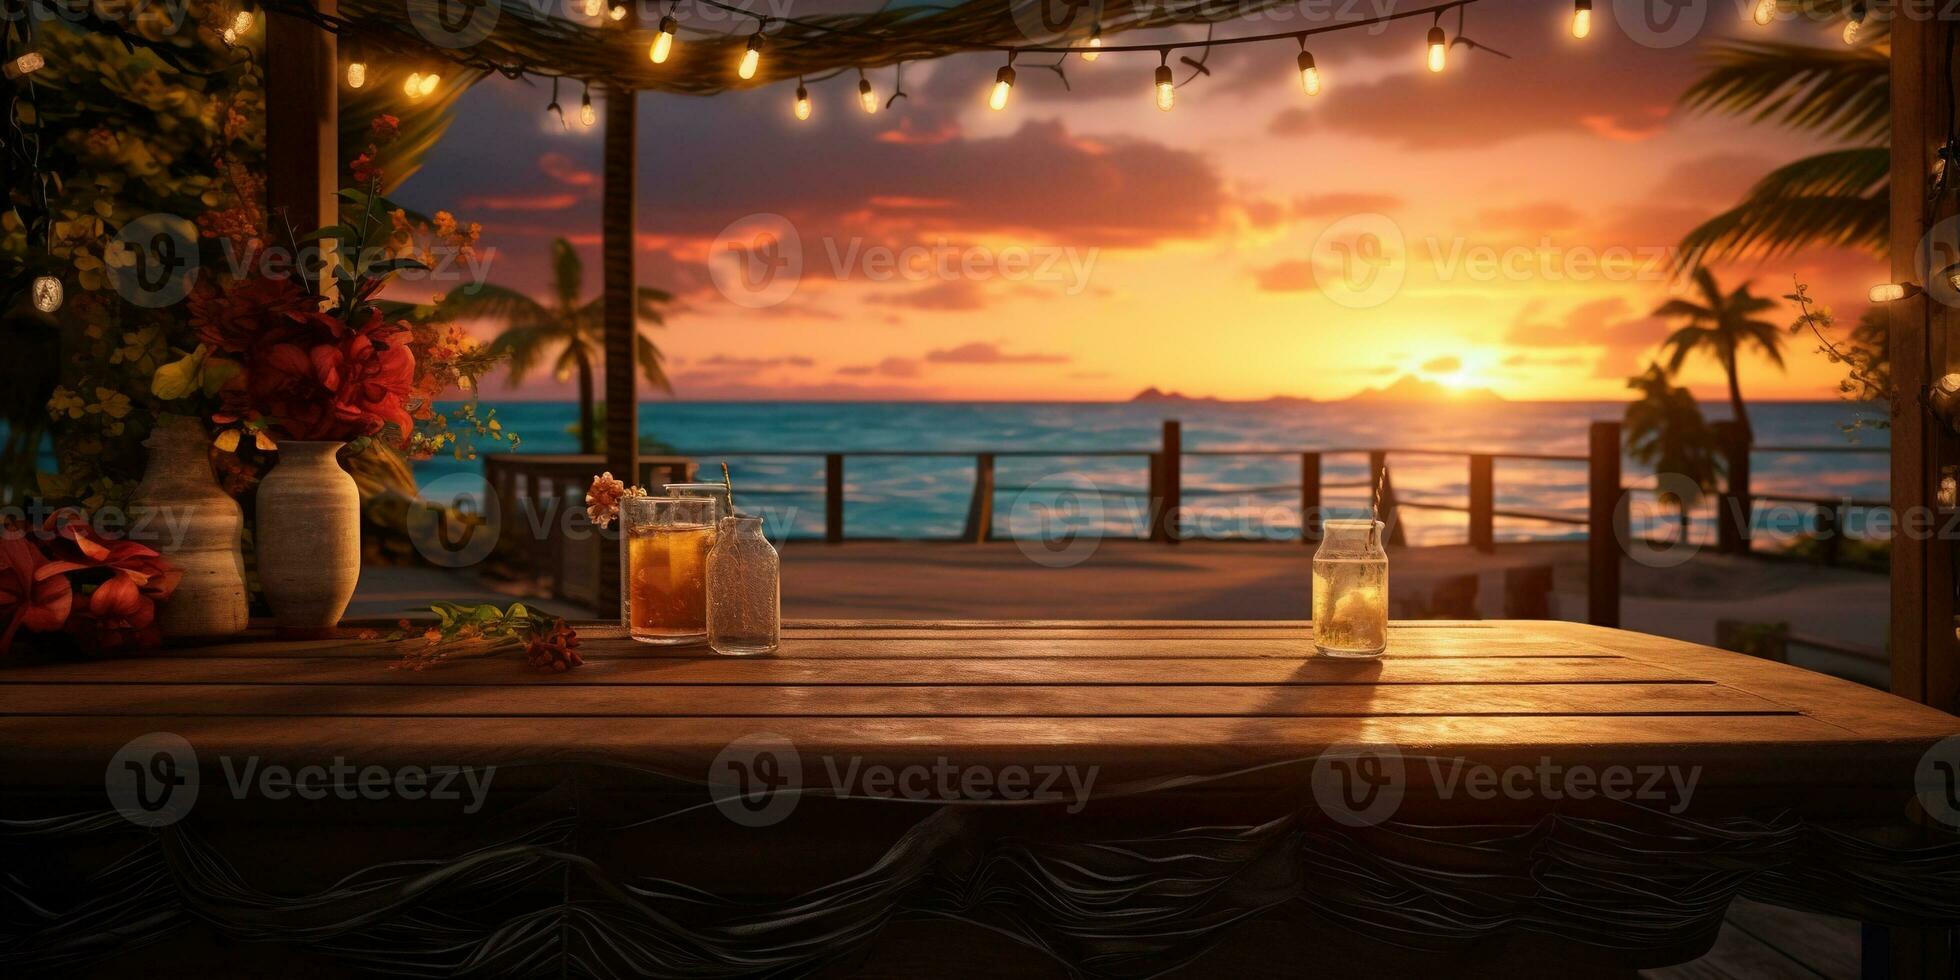 generatief ai, tropisch zomer zonsondergang strand bar achtergrond. buitenshuis restaurant, LED licht kaarsen en houten tafels, stoelen onder mooi zonsondergang lucht, zee visie. foto